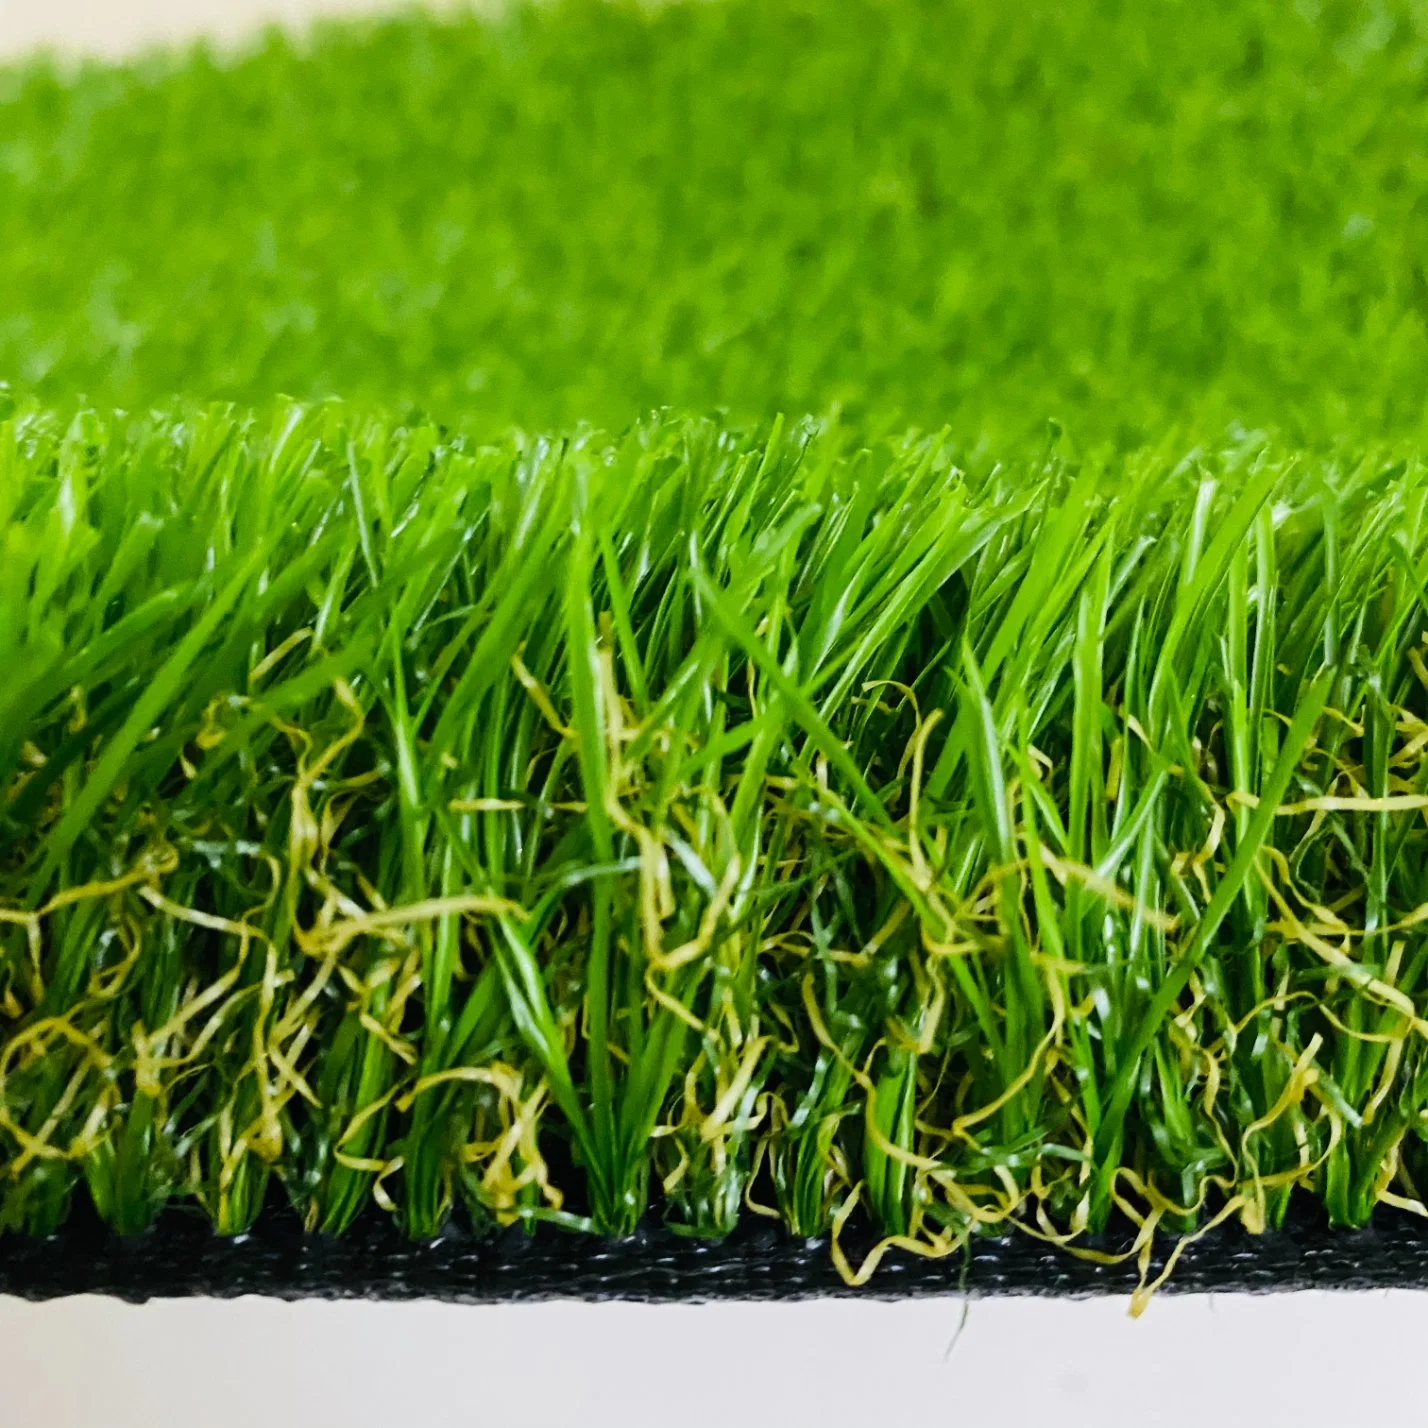 Factory Wholesale Price Green Fake Grass Synthetic Turf Landscape Carpet Grass Mat Garden Lawn Artificial Grass Football Soccer Golf Sports Synthetic Grass